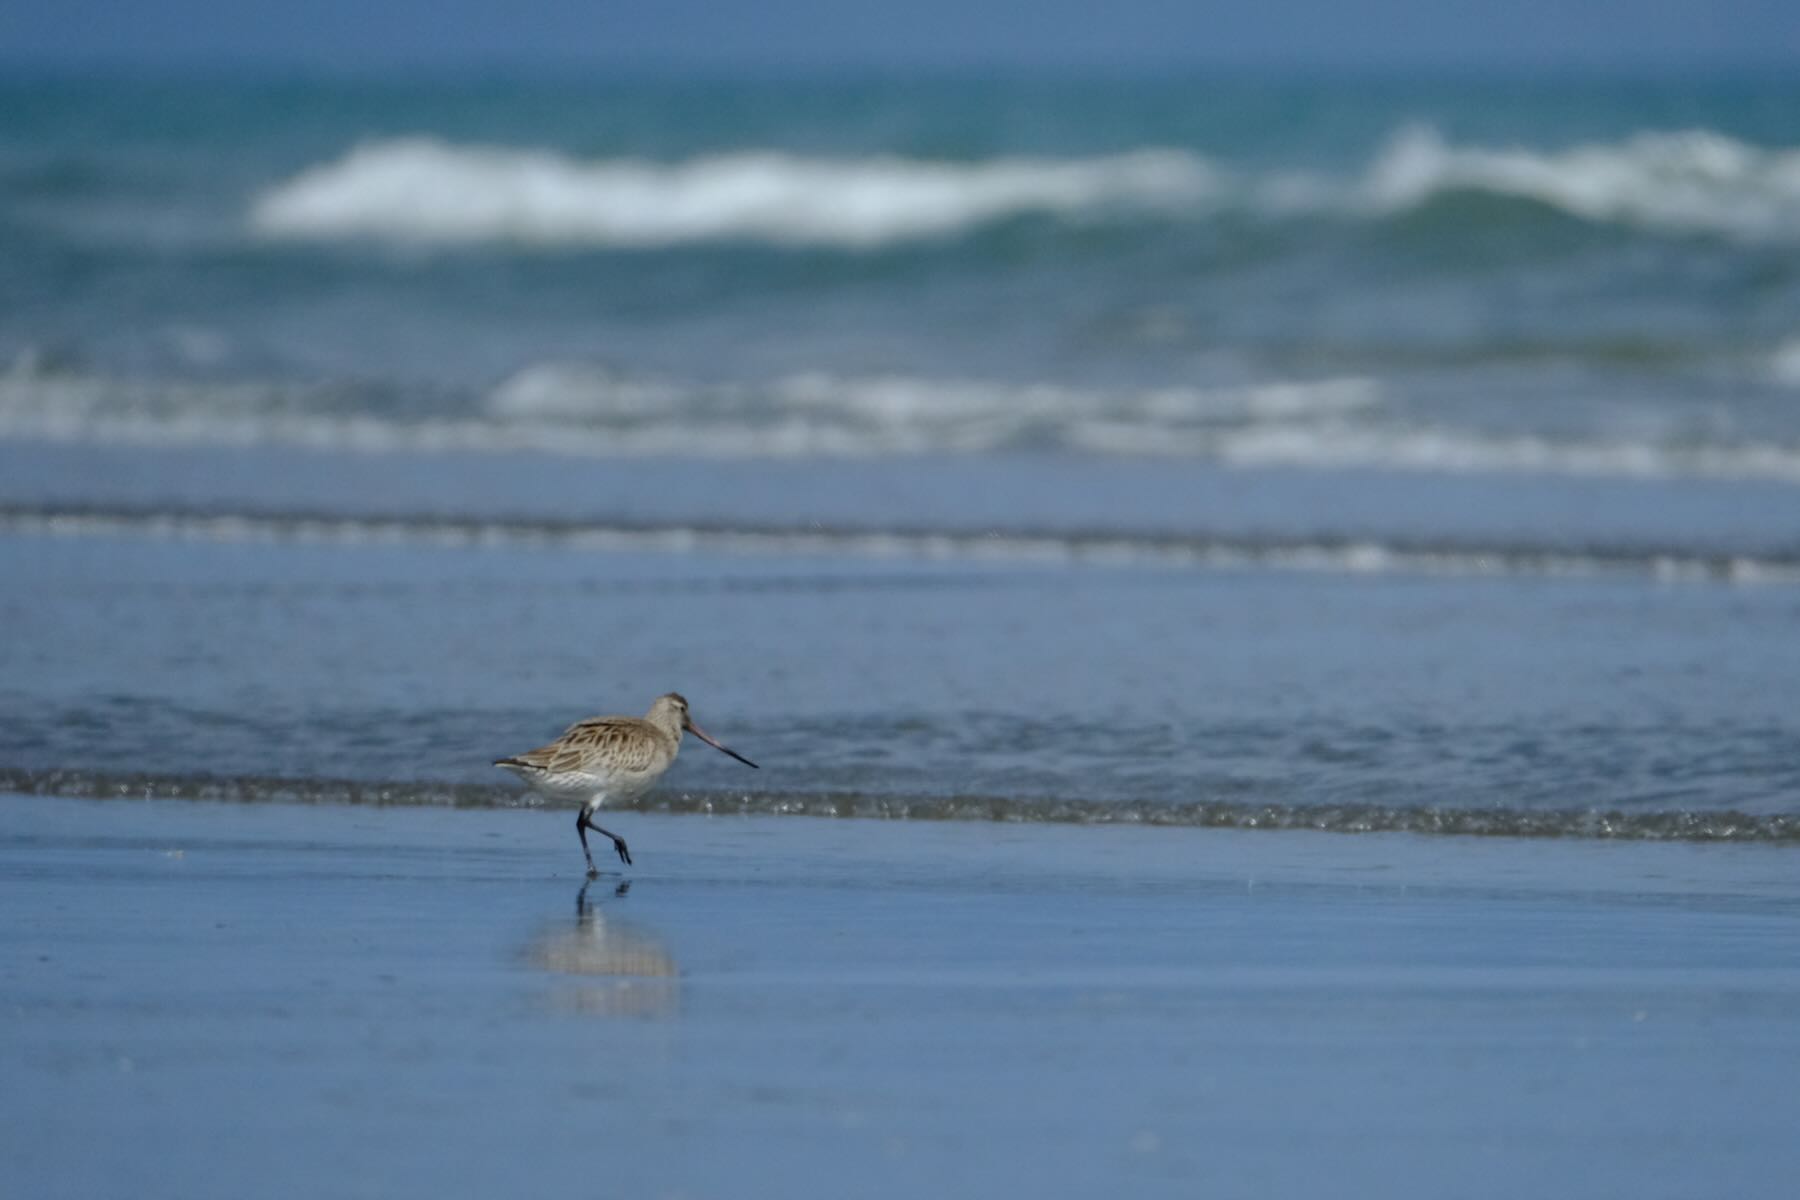 Medium sized long-billed bird walks on wet sand at the beach. 